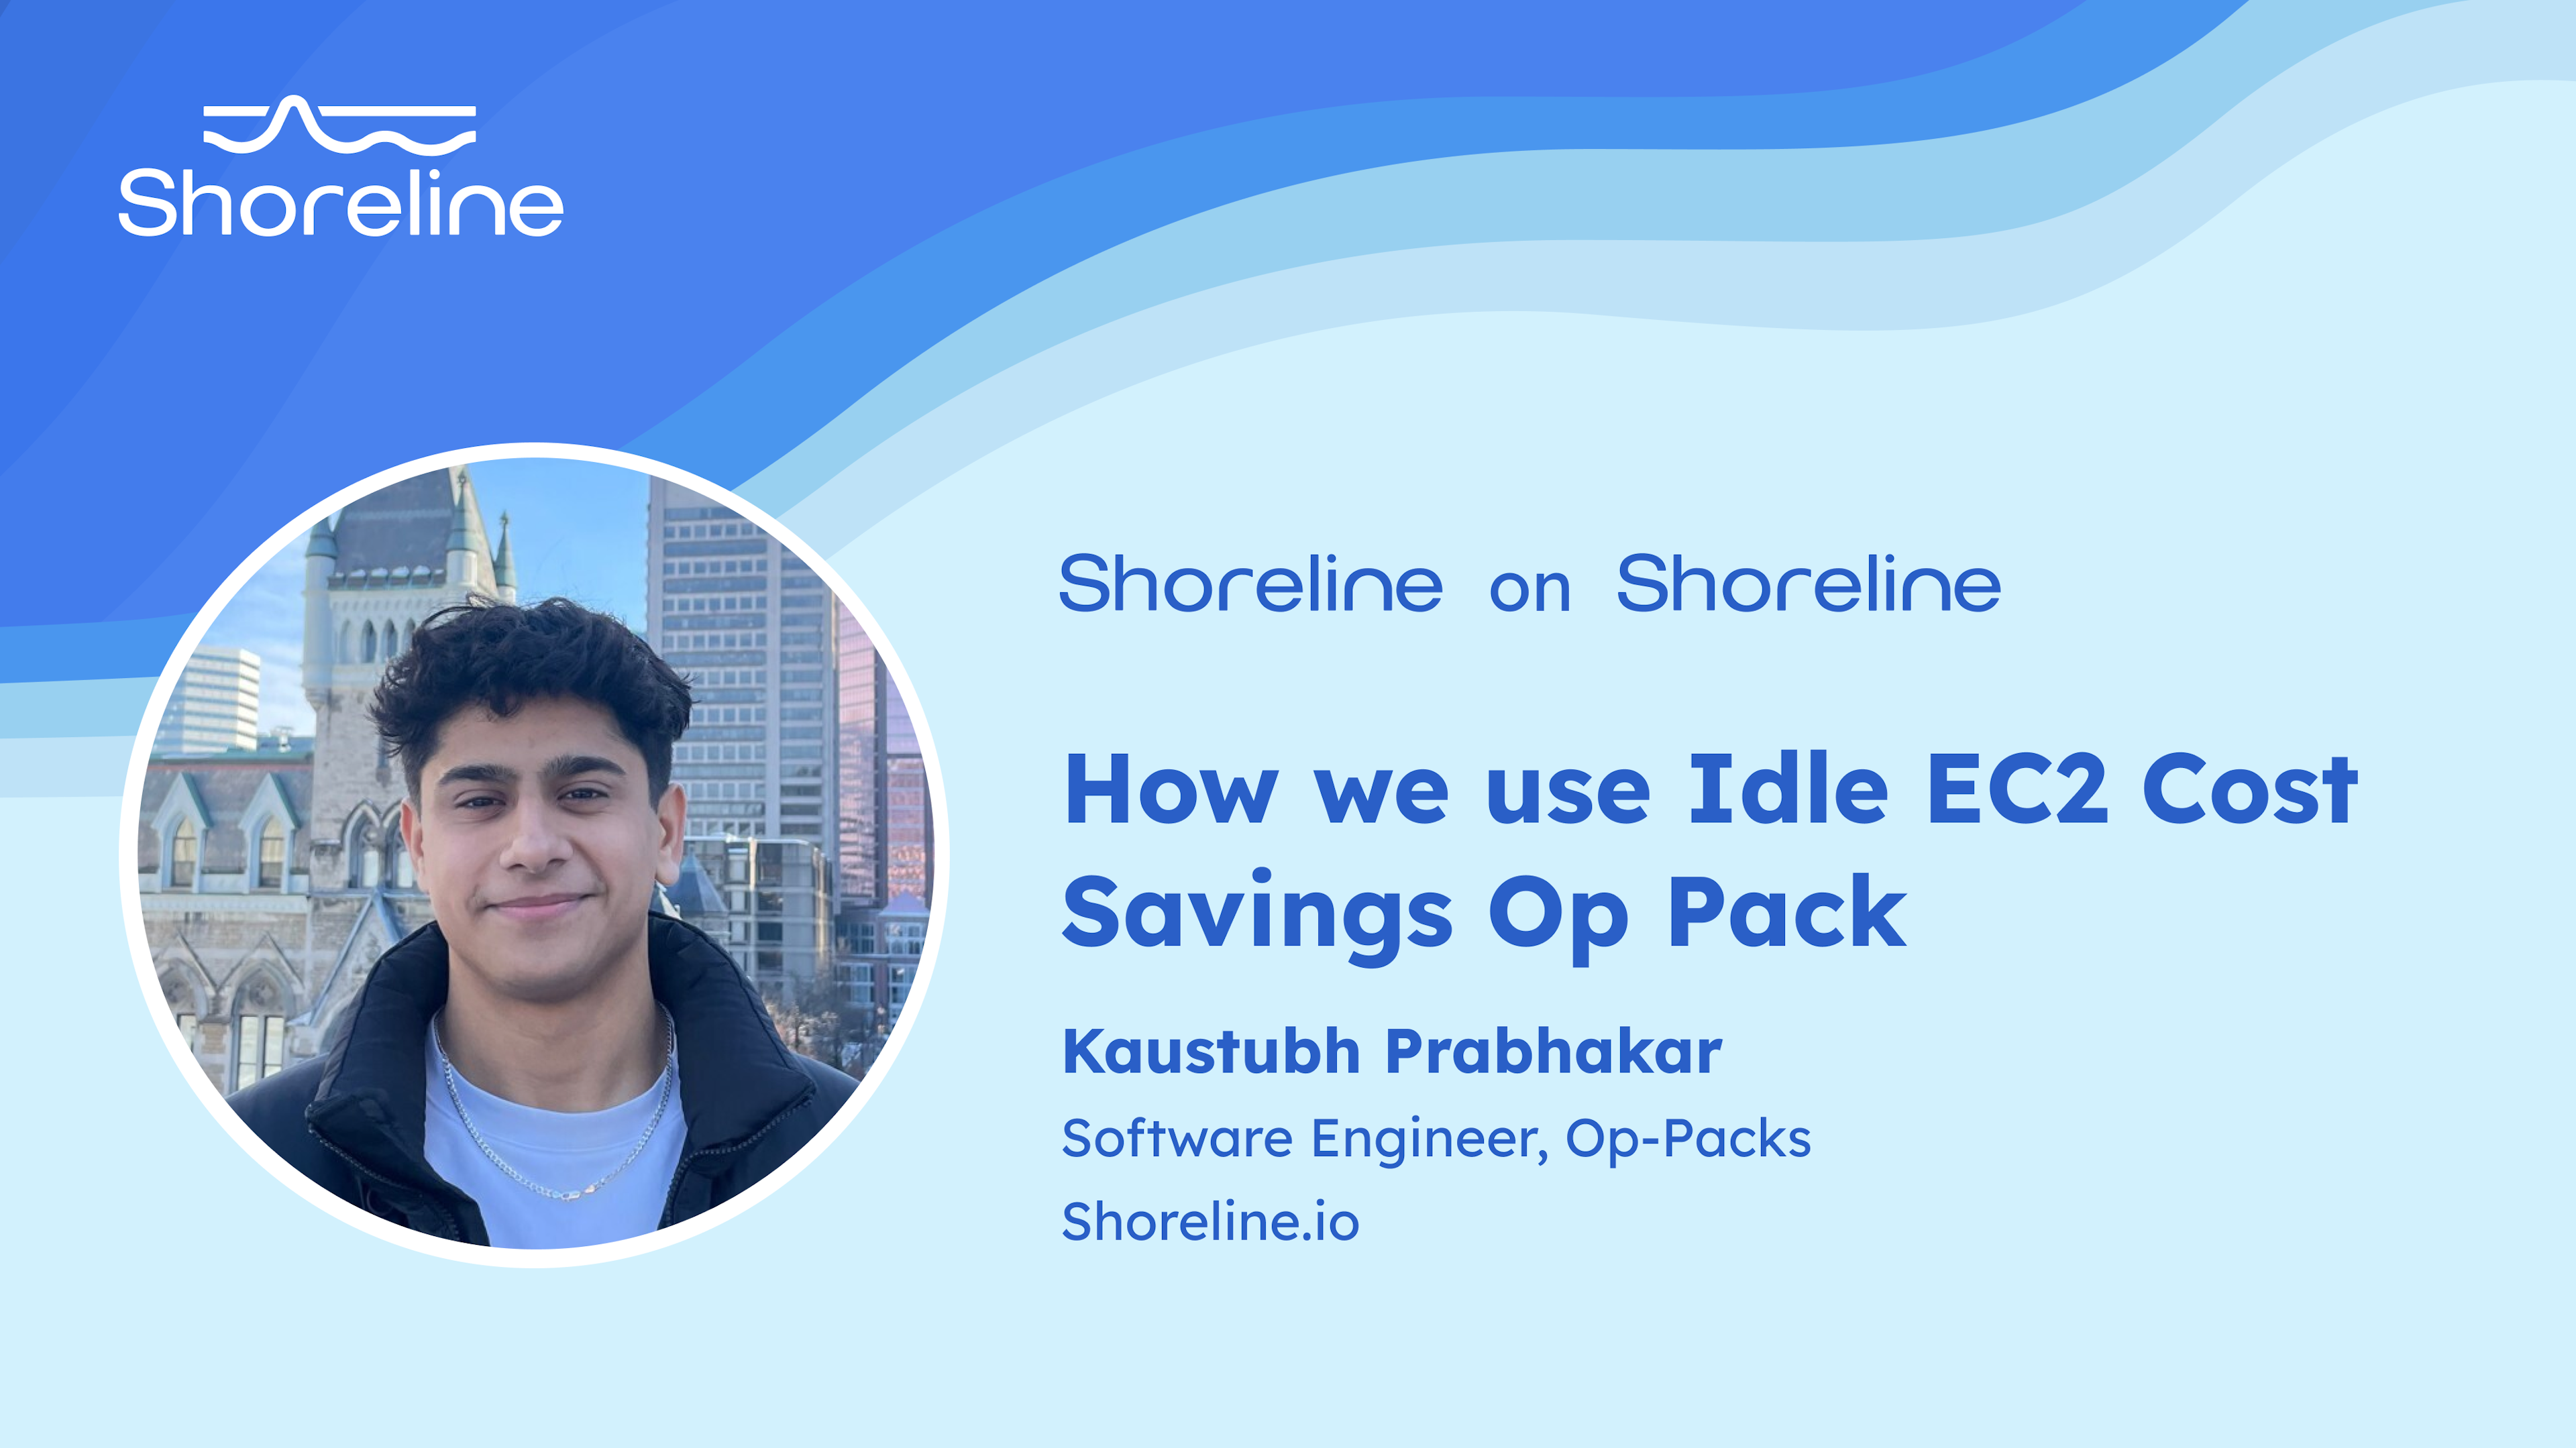 Shoreline on Shoreline: Idle EC2 Cost Savings Op Pack